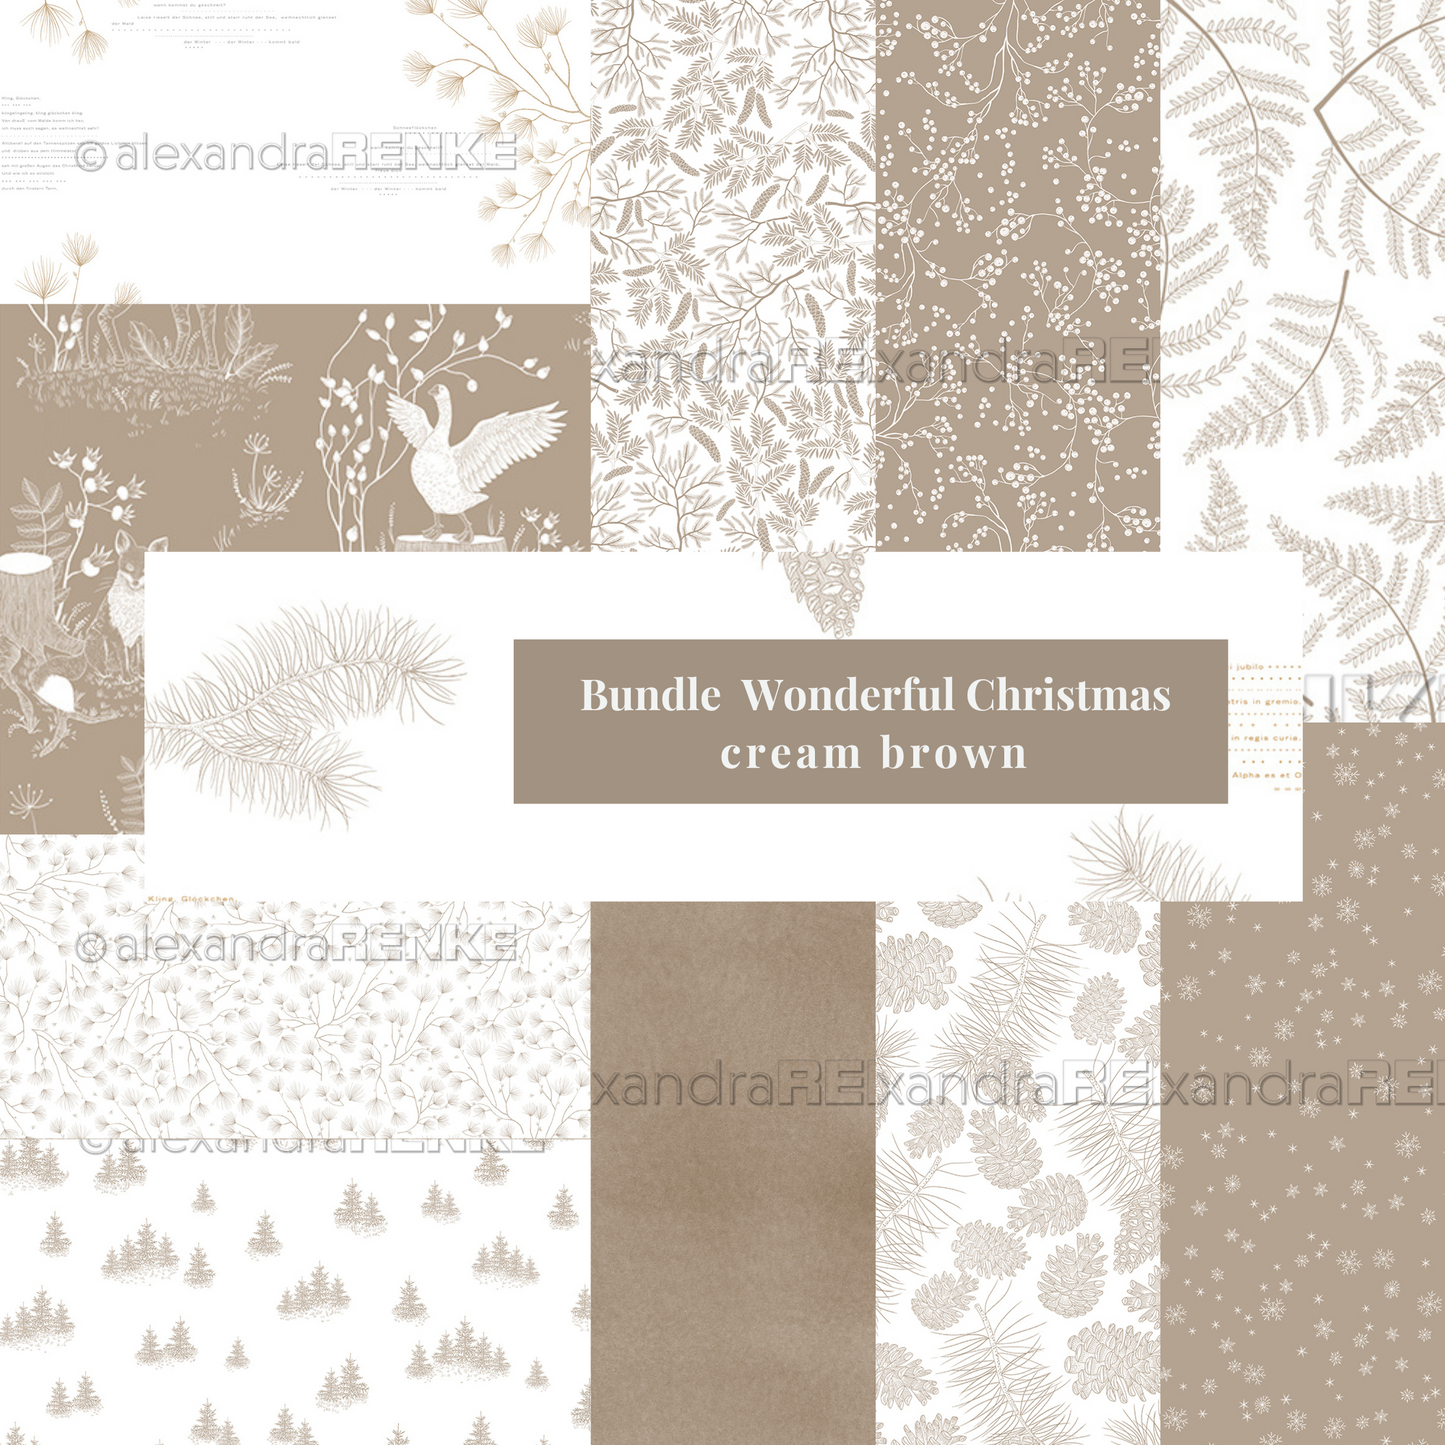 Bundle  "Wonderful Christmas cream brown"- A.RENKE